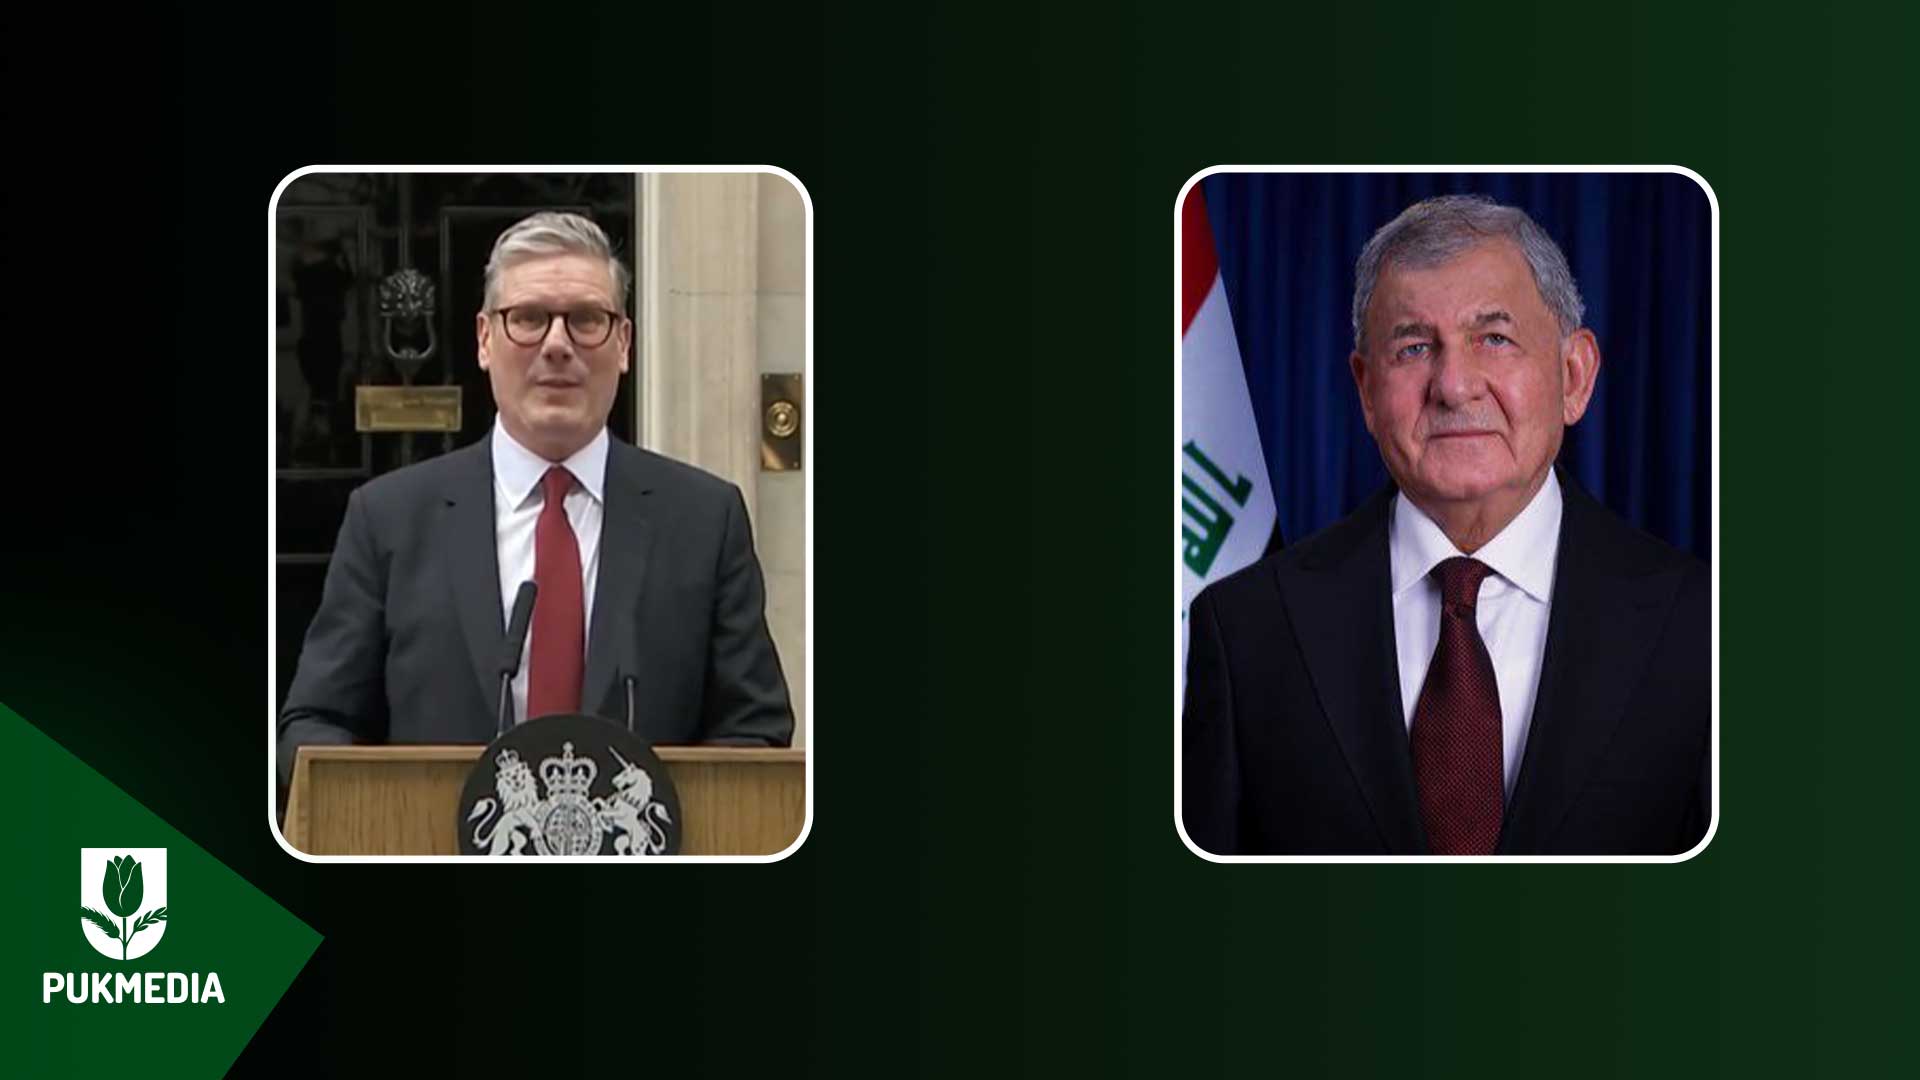  Iraqi President Abdullatif Jamal Rashid and Keir Starmer, the newly appointed British Prime Minister.